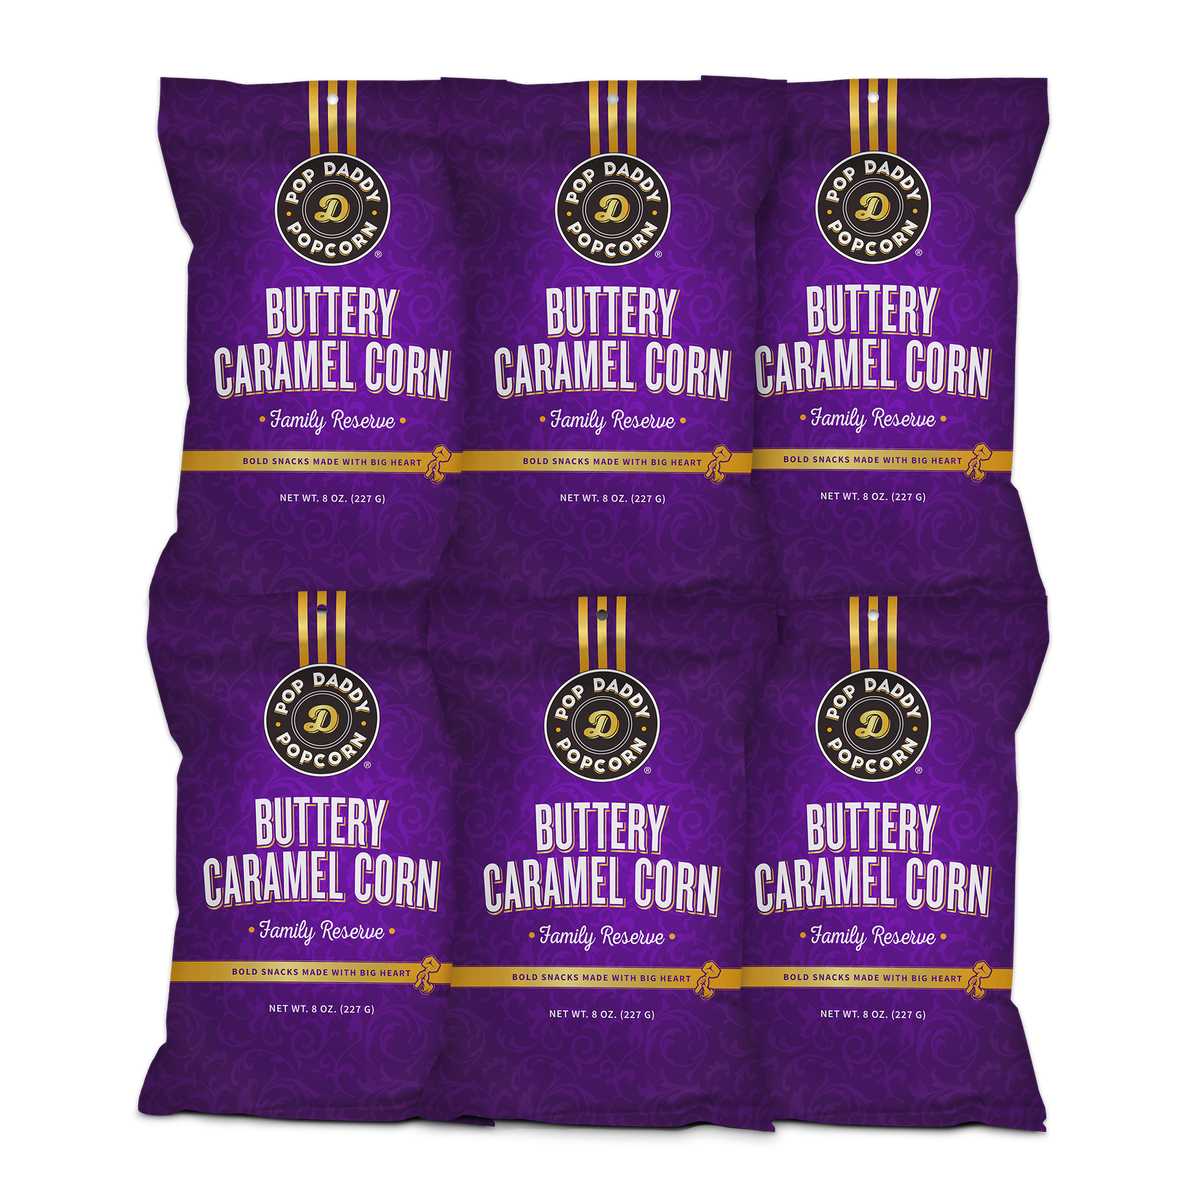 6 Bag Premium Buttery Caramel Corn Family Reserve